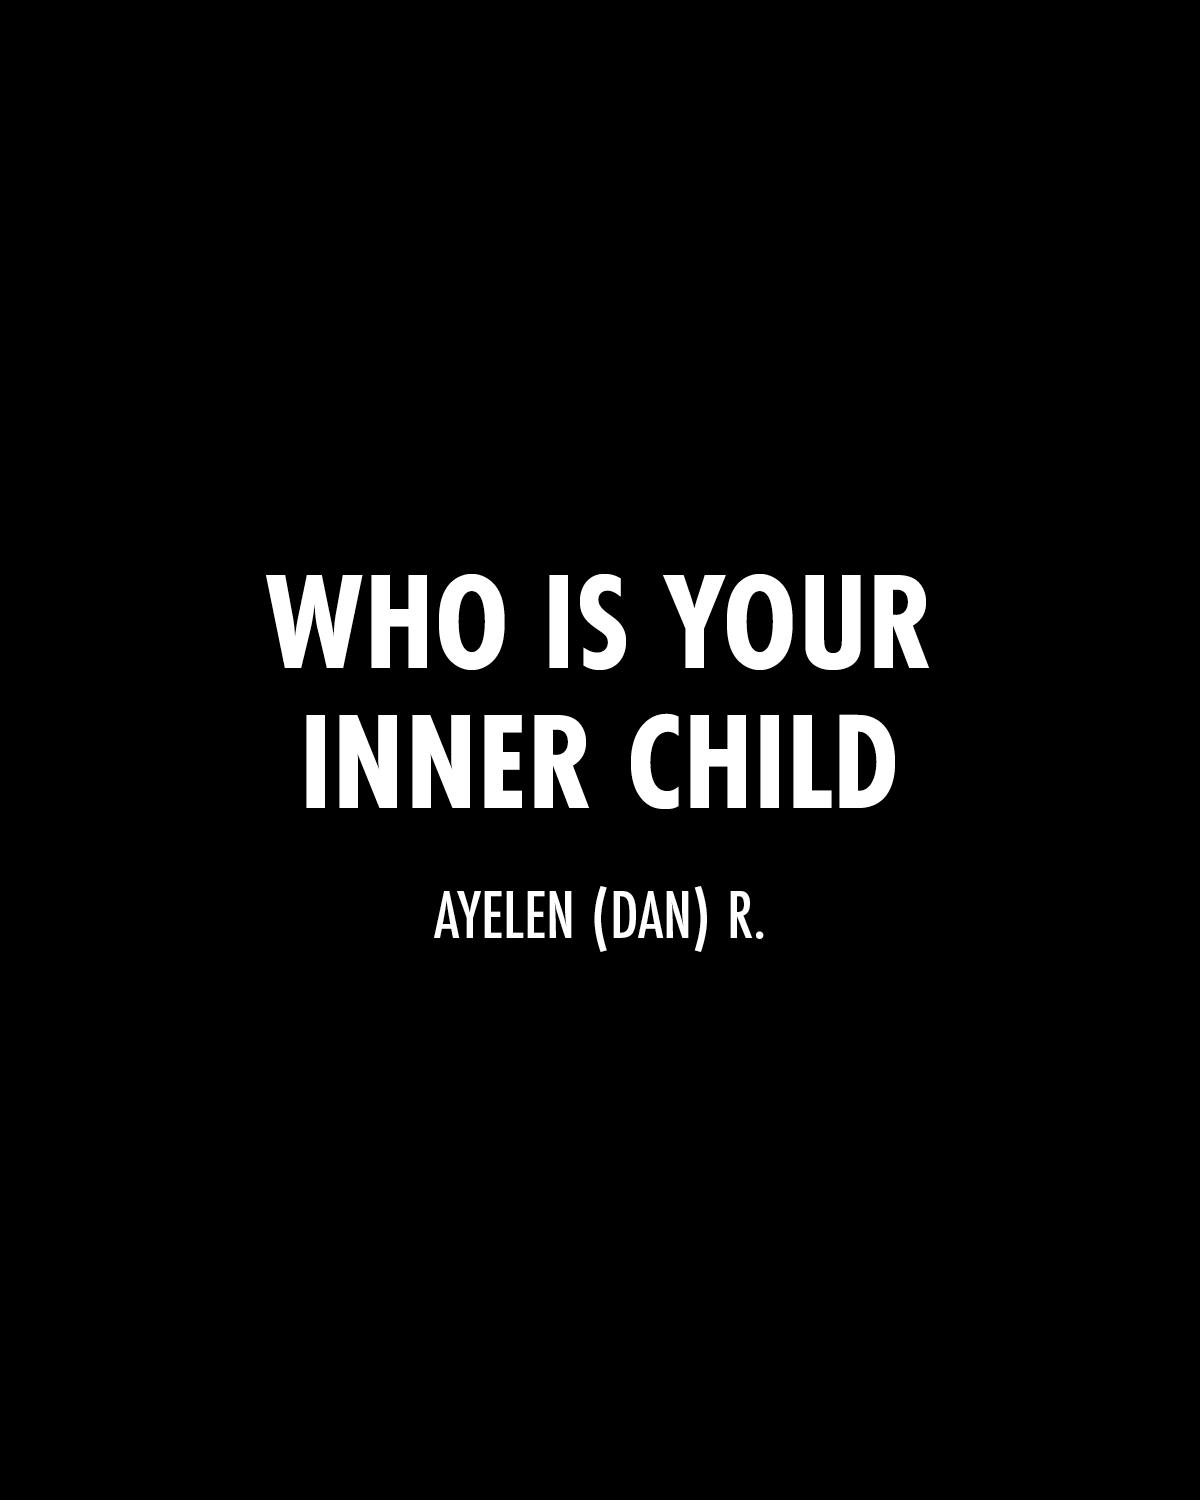 Unleashing Your Child's Inner Artist, …